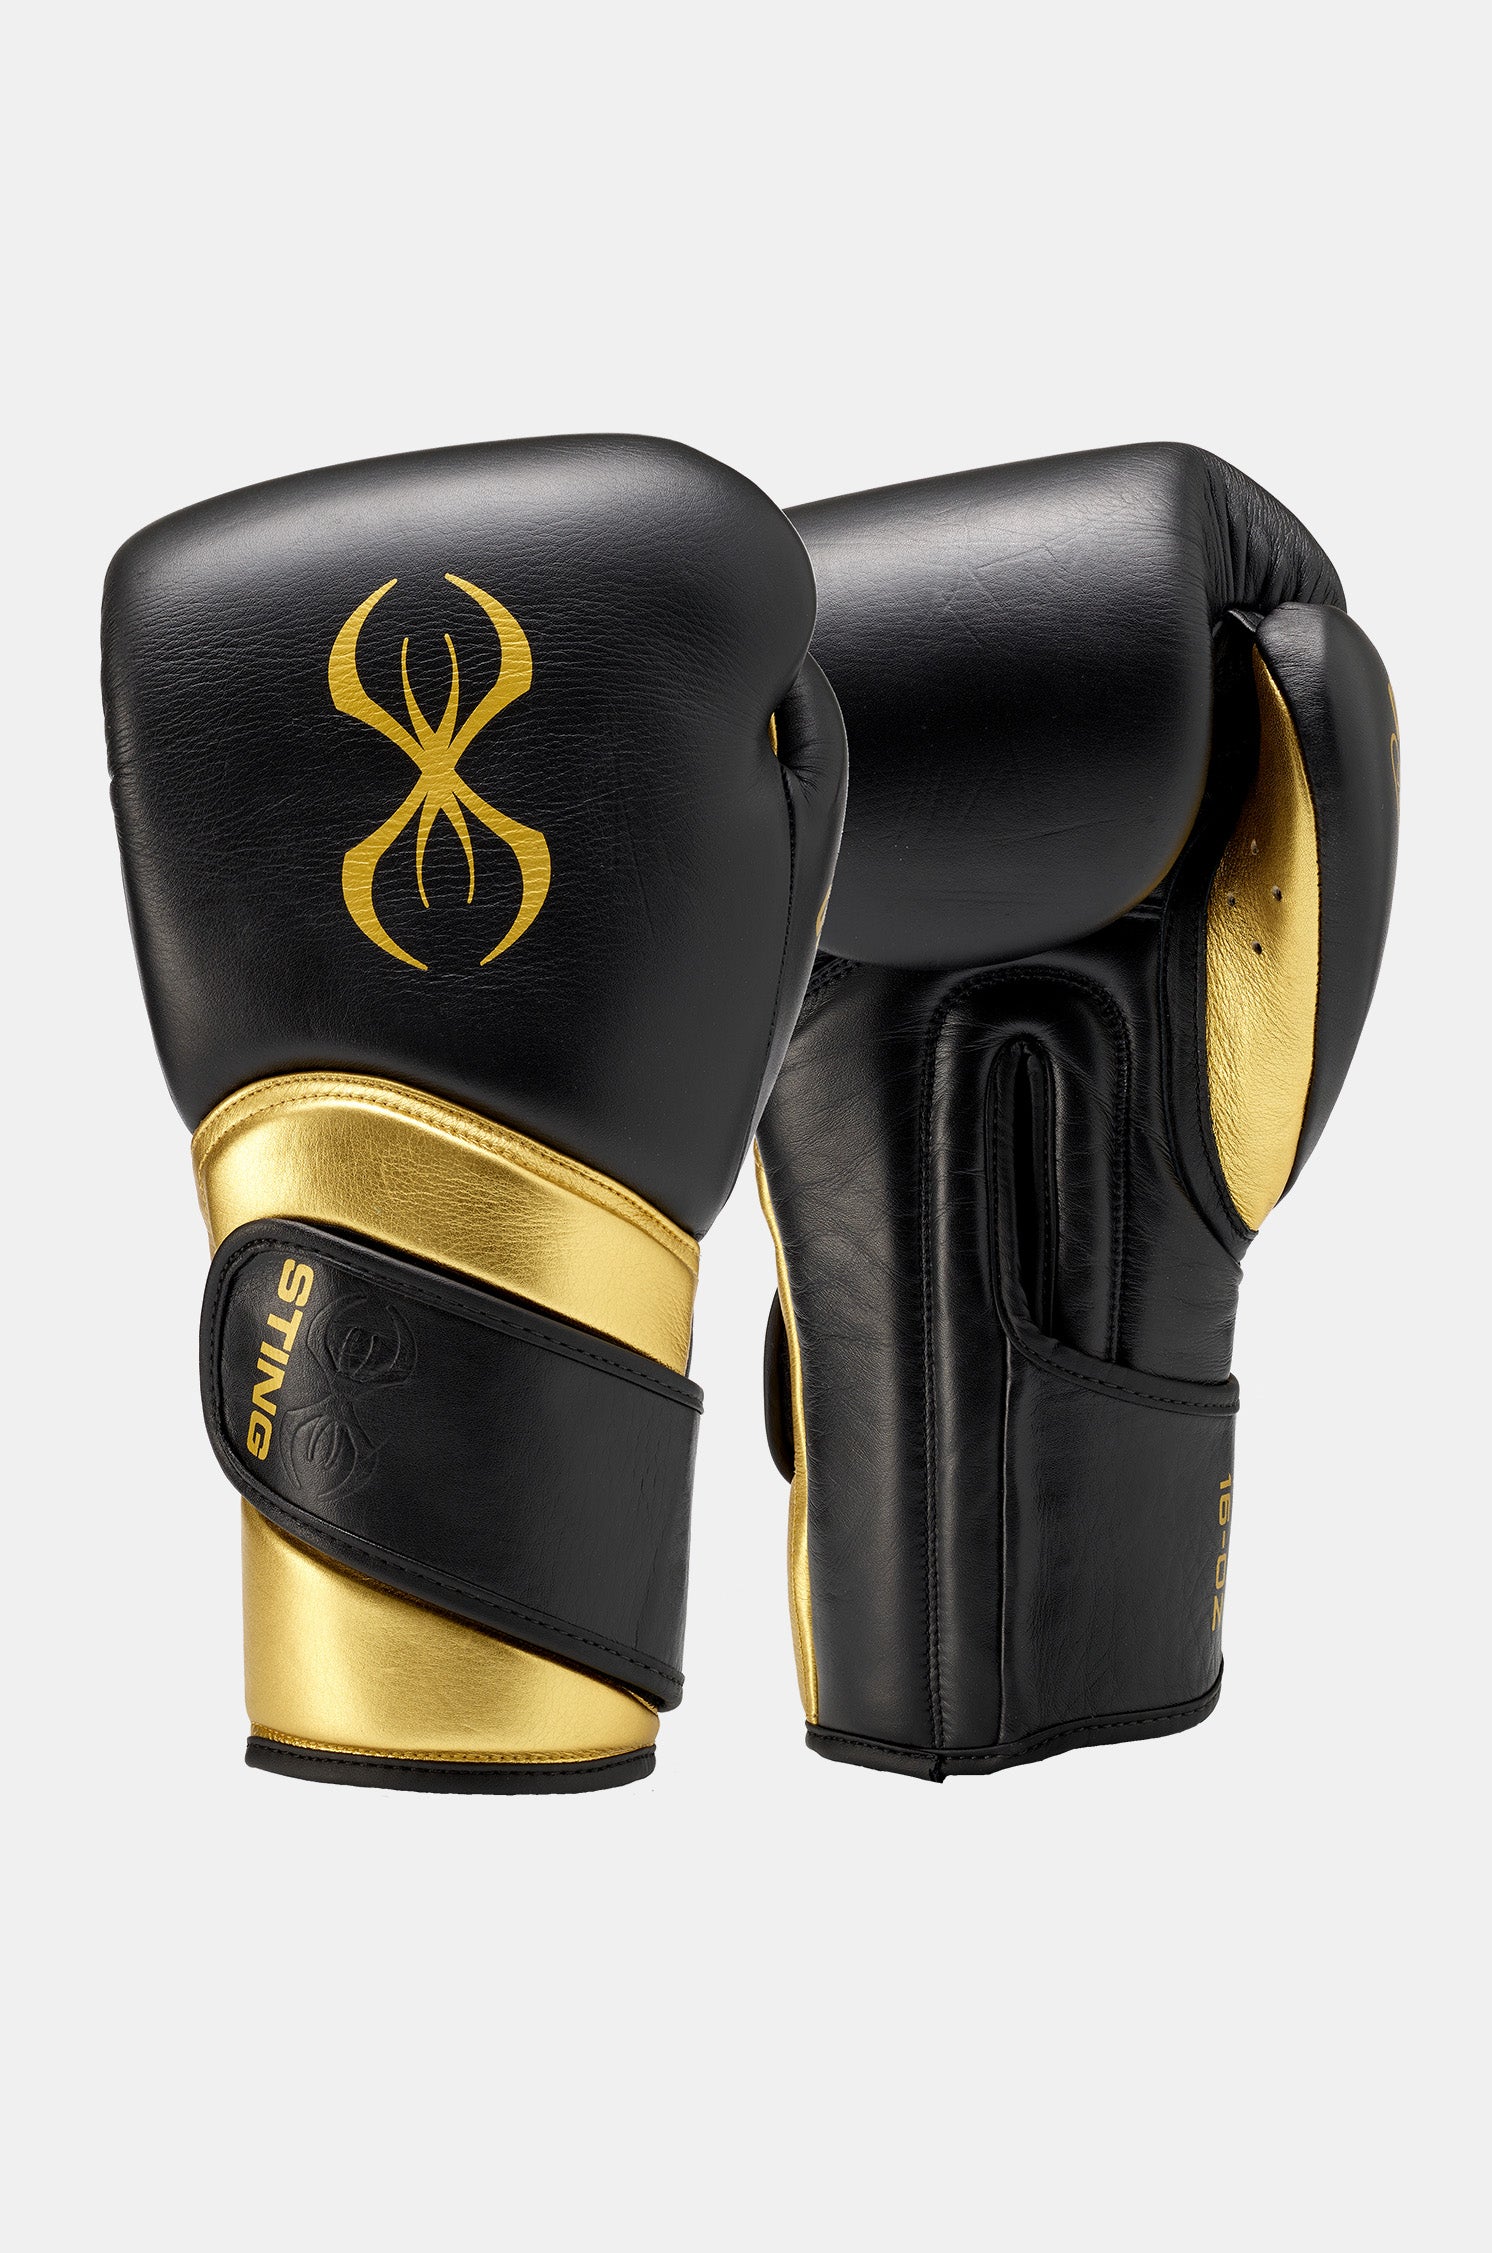 STING Viper Boxing Glove Black Gold